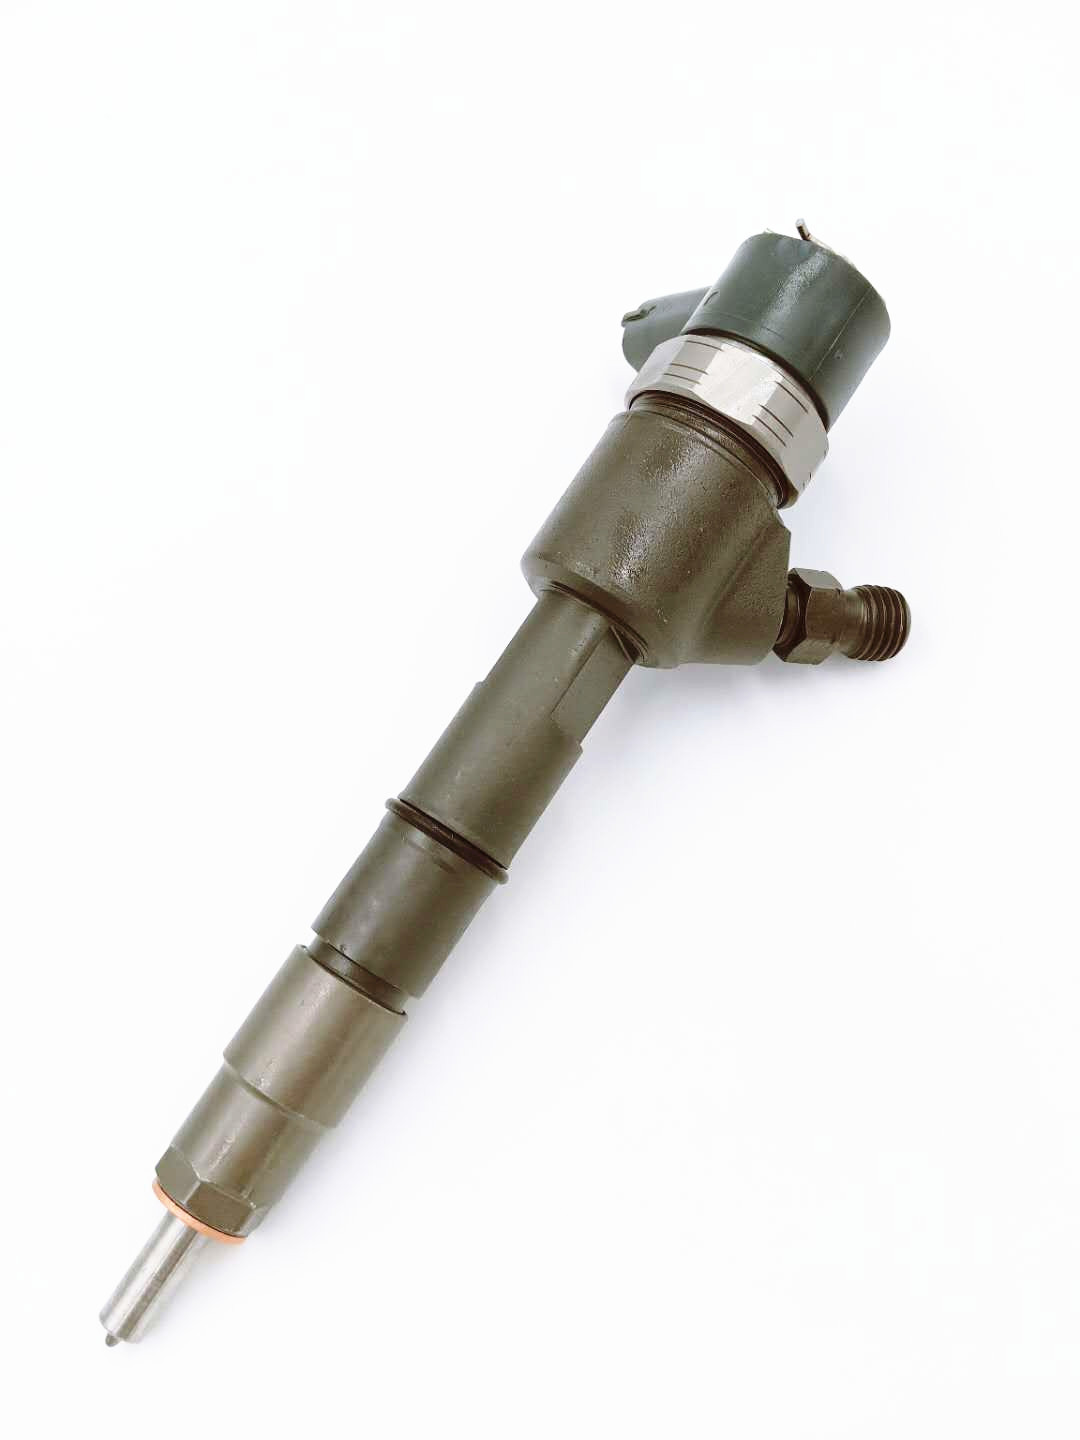 Diesel Injector Fuel Injector 0445110691 Bosch for BAW Foton Cummins